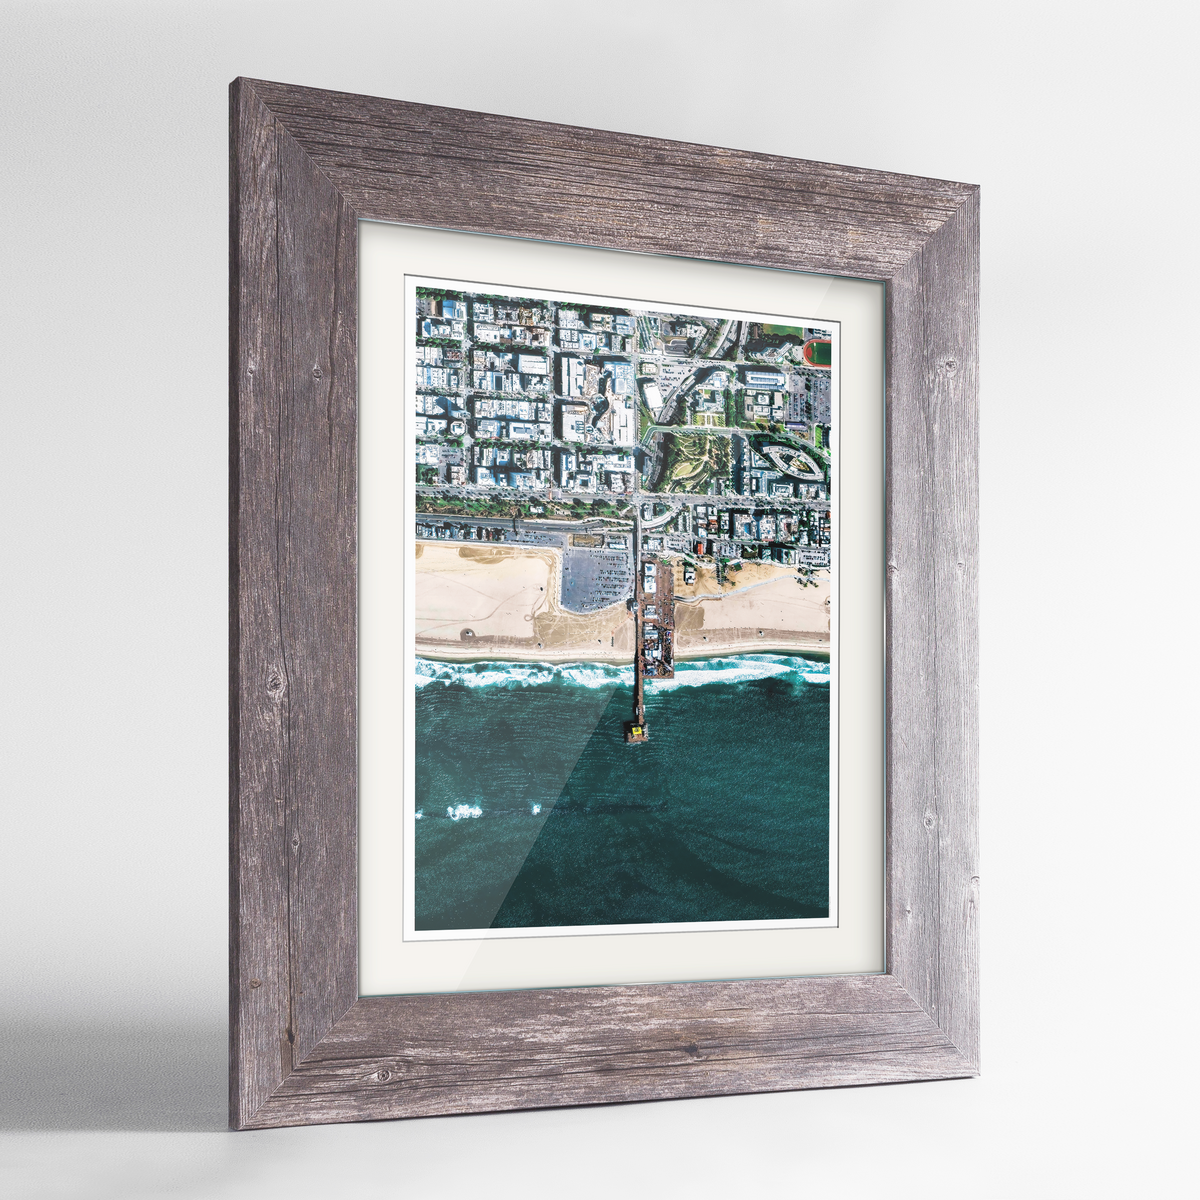 Santa Monica Pier Earth Photography Art Print - Framed